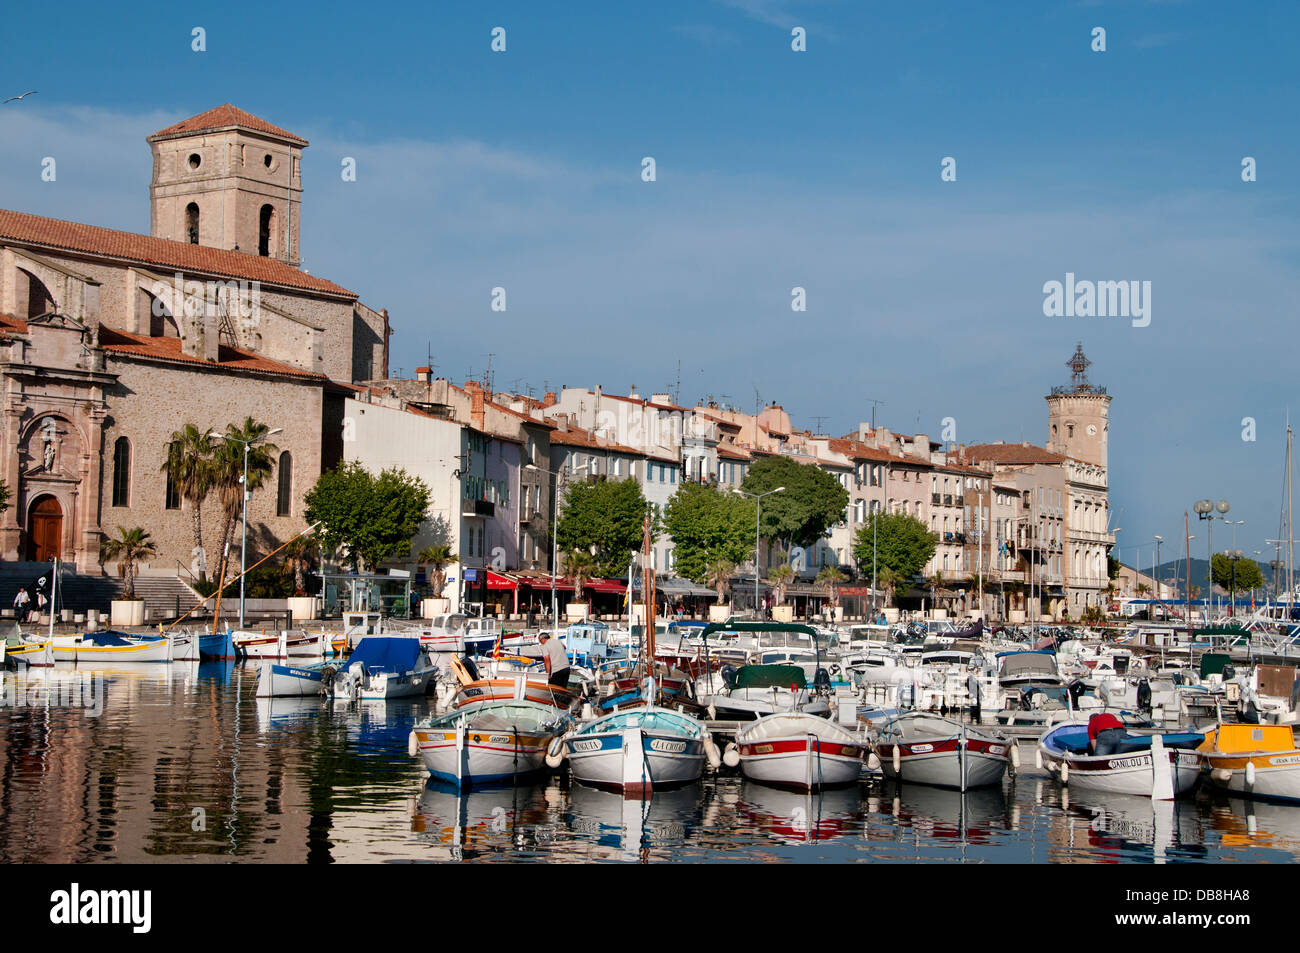 La Ciotat alten Vieux Port Hafen Provence Côte d ' Azur Cote d ' Azur Frankreich mediterran Stockfoto